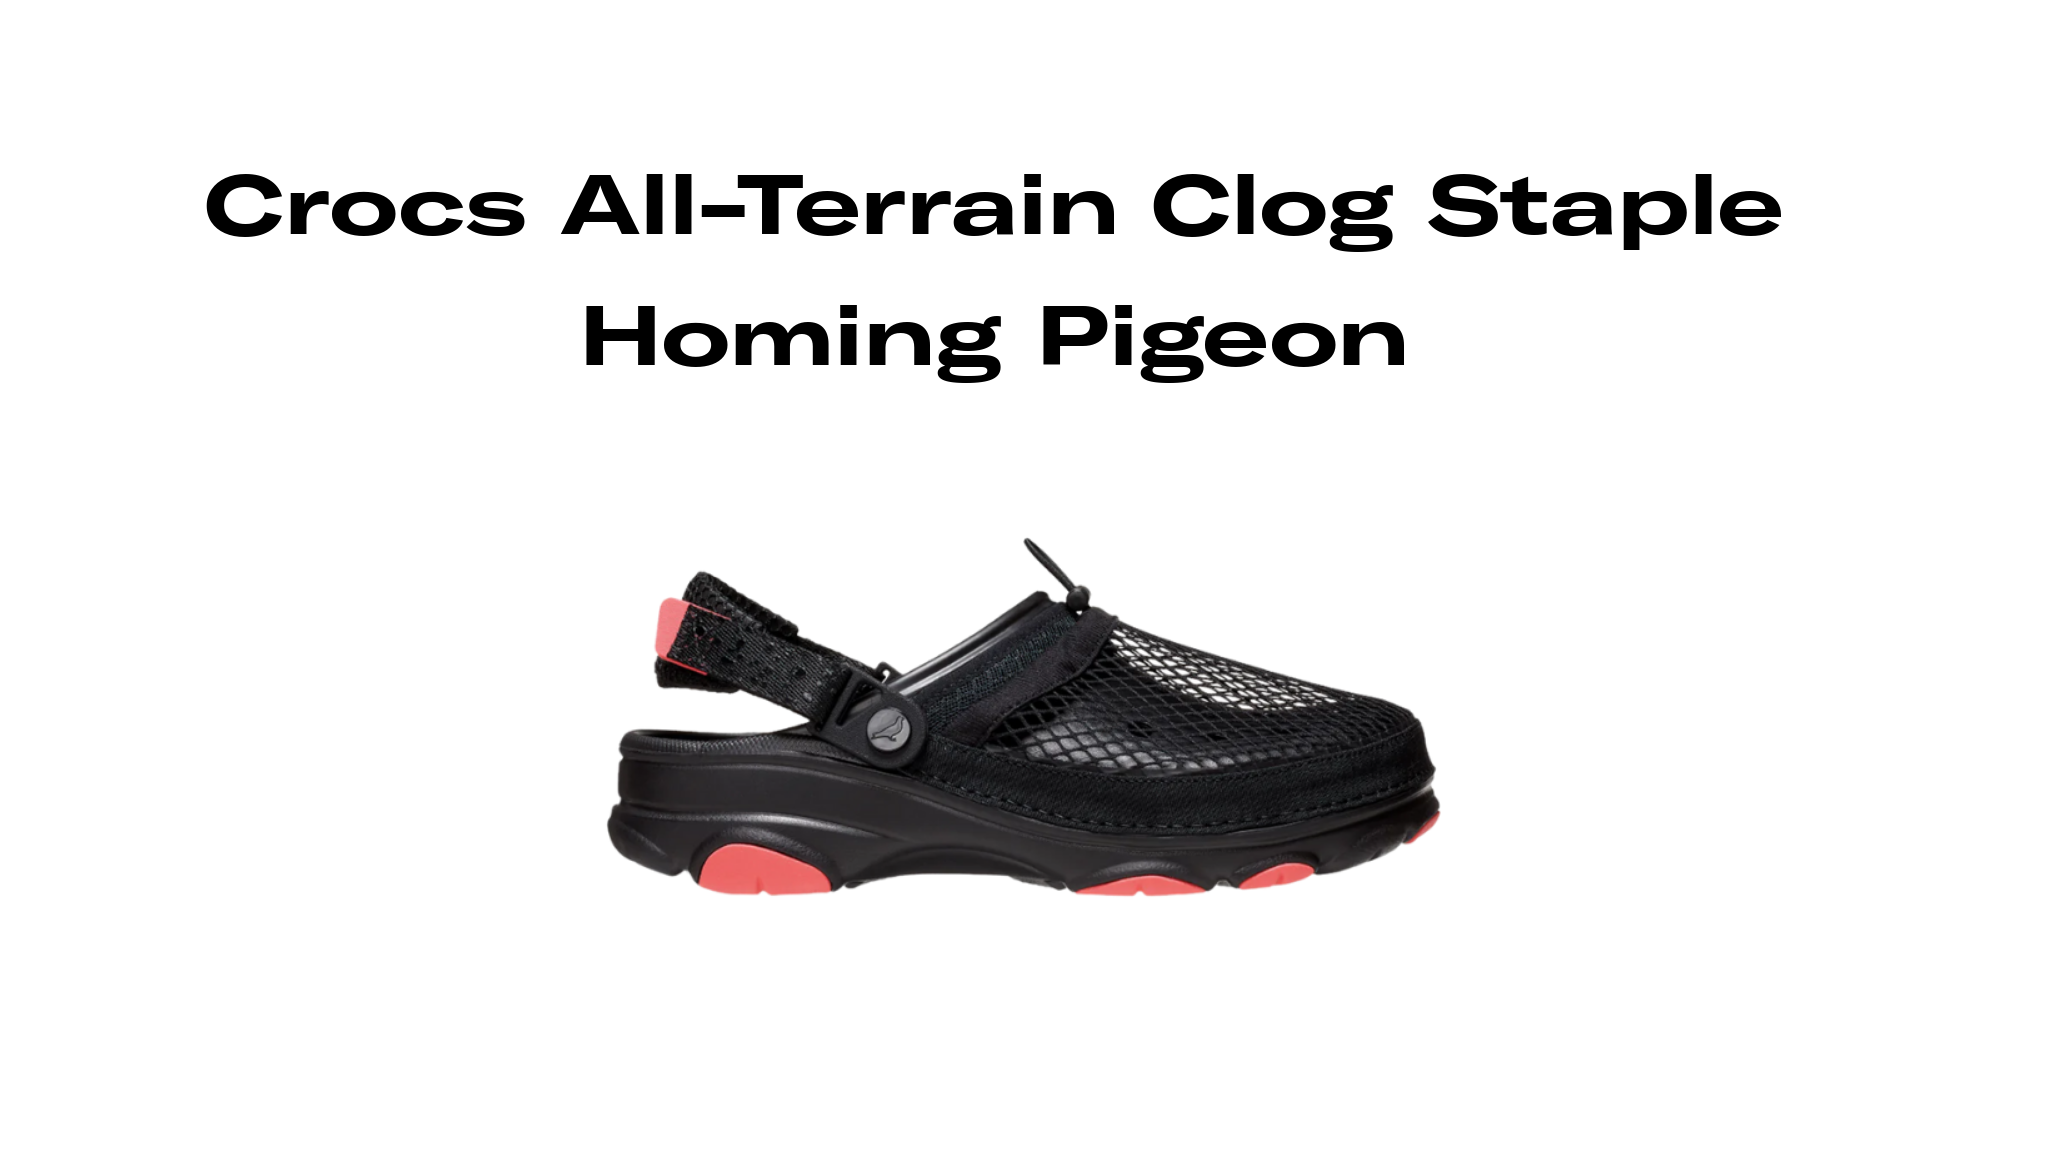 Crocs All-Terrain Clog Staple Homing Pigeon, Raffles and Release 